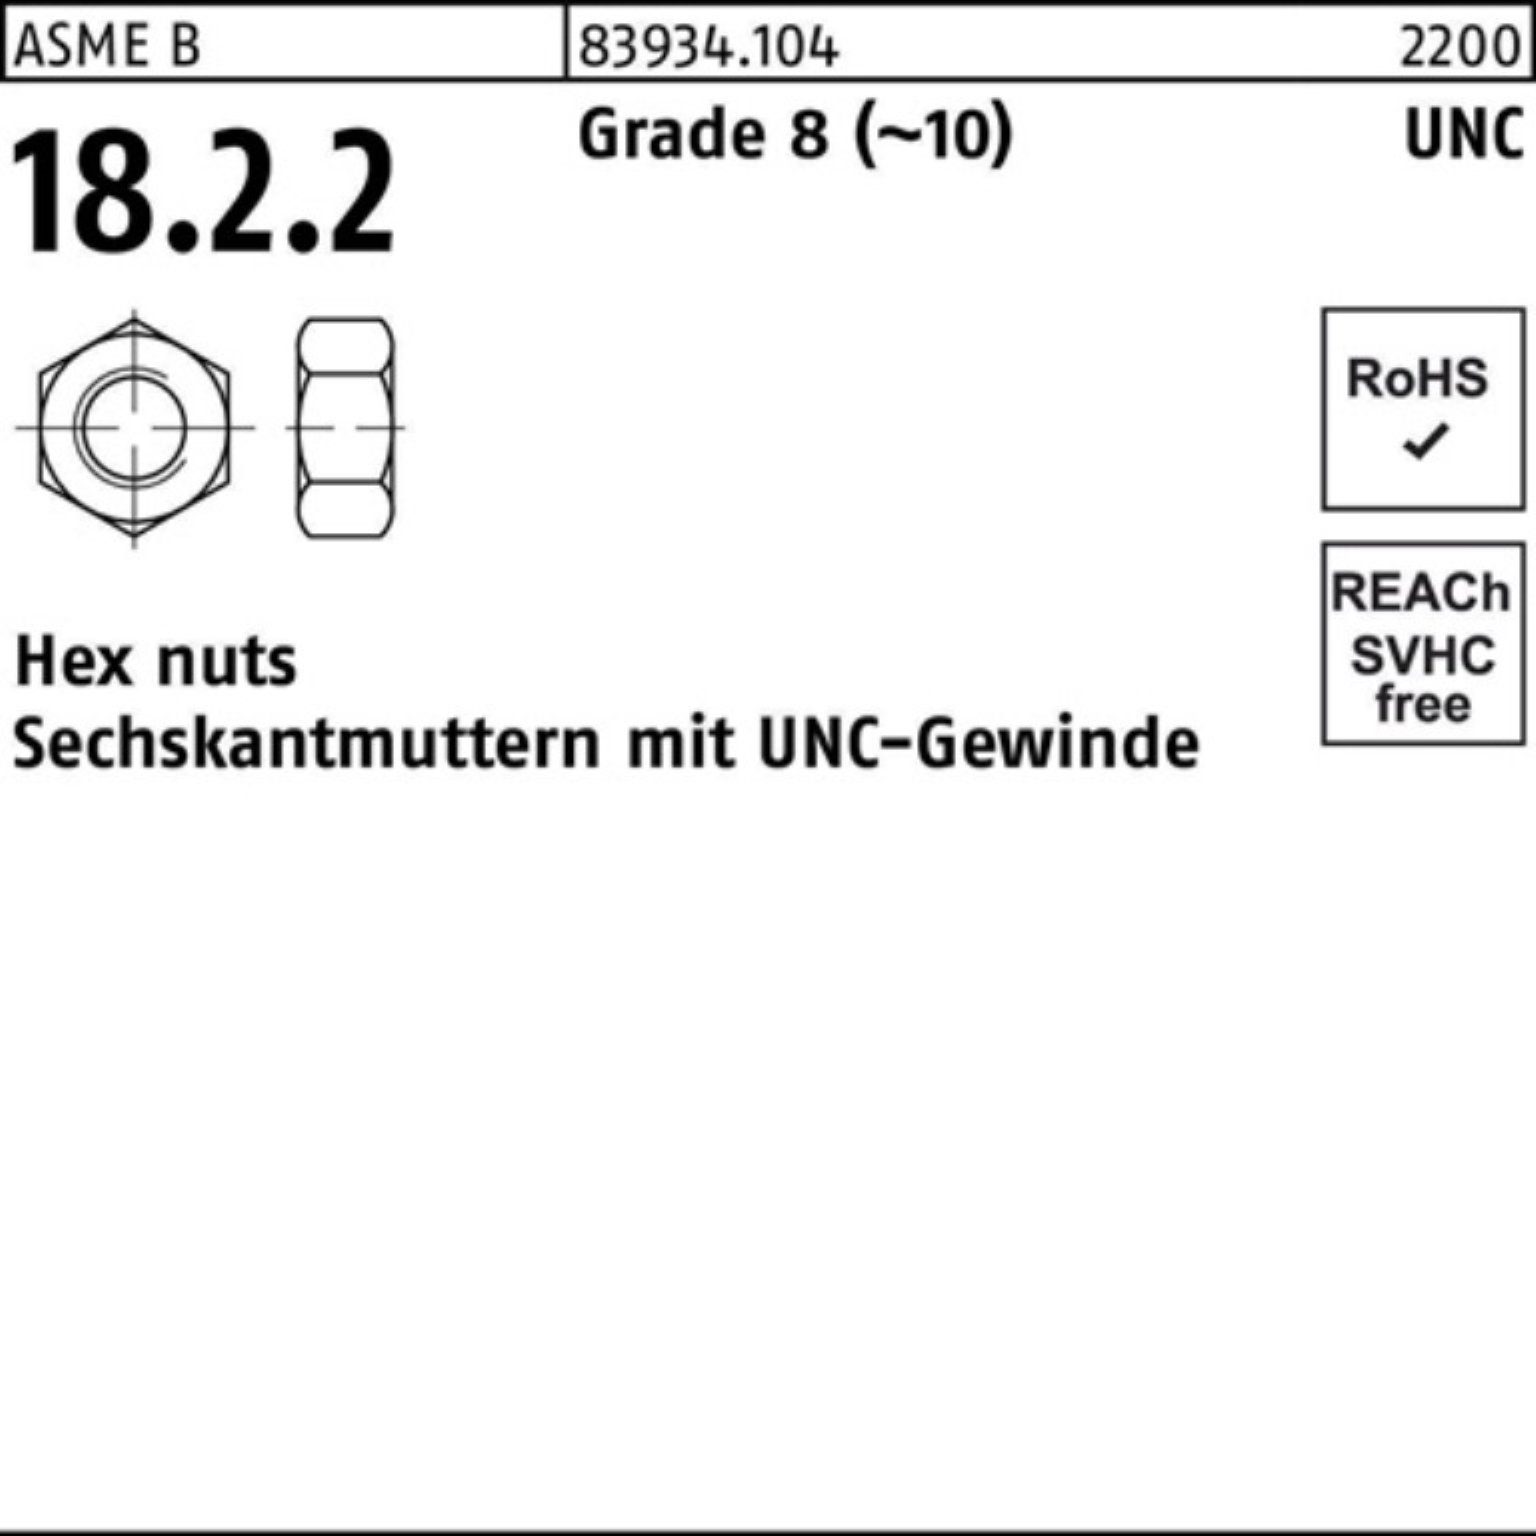 Reyher Muttern 100er UNC-Gewinde S Sechskantmutter 50 R (10) 83934 Grade 9/16 8 Pack